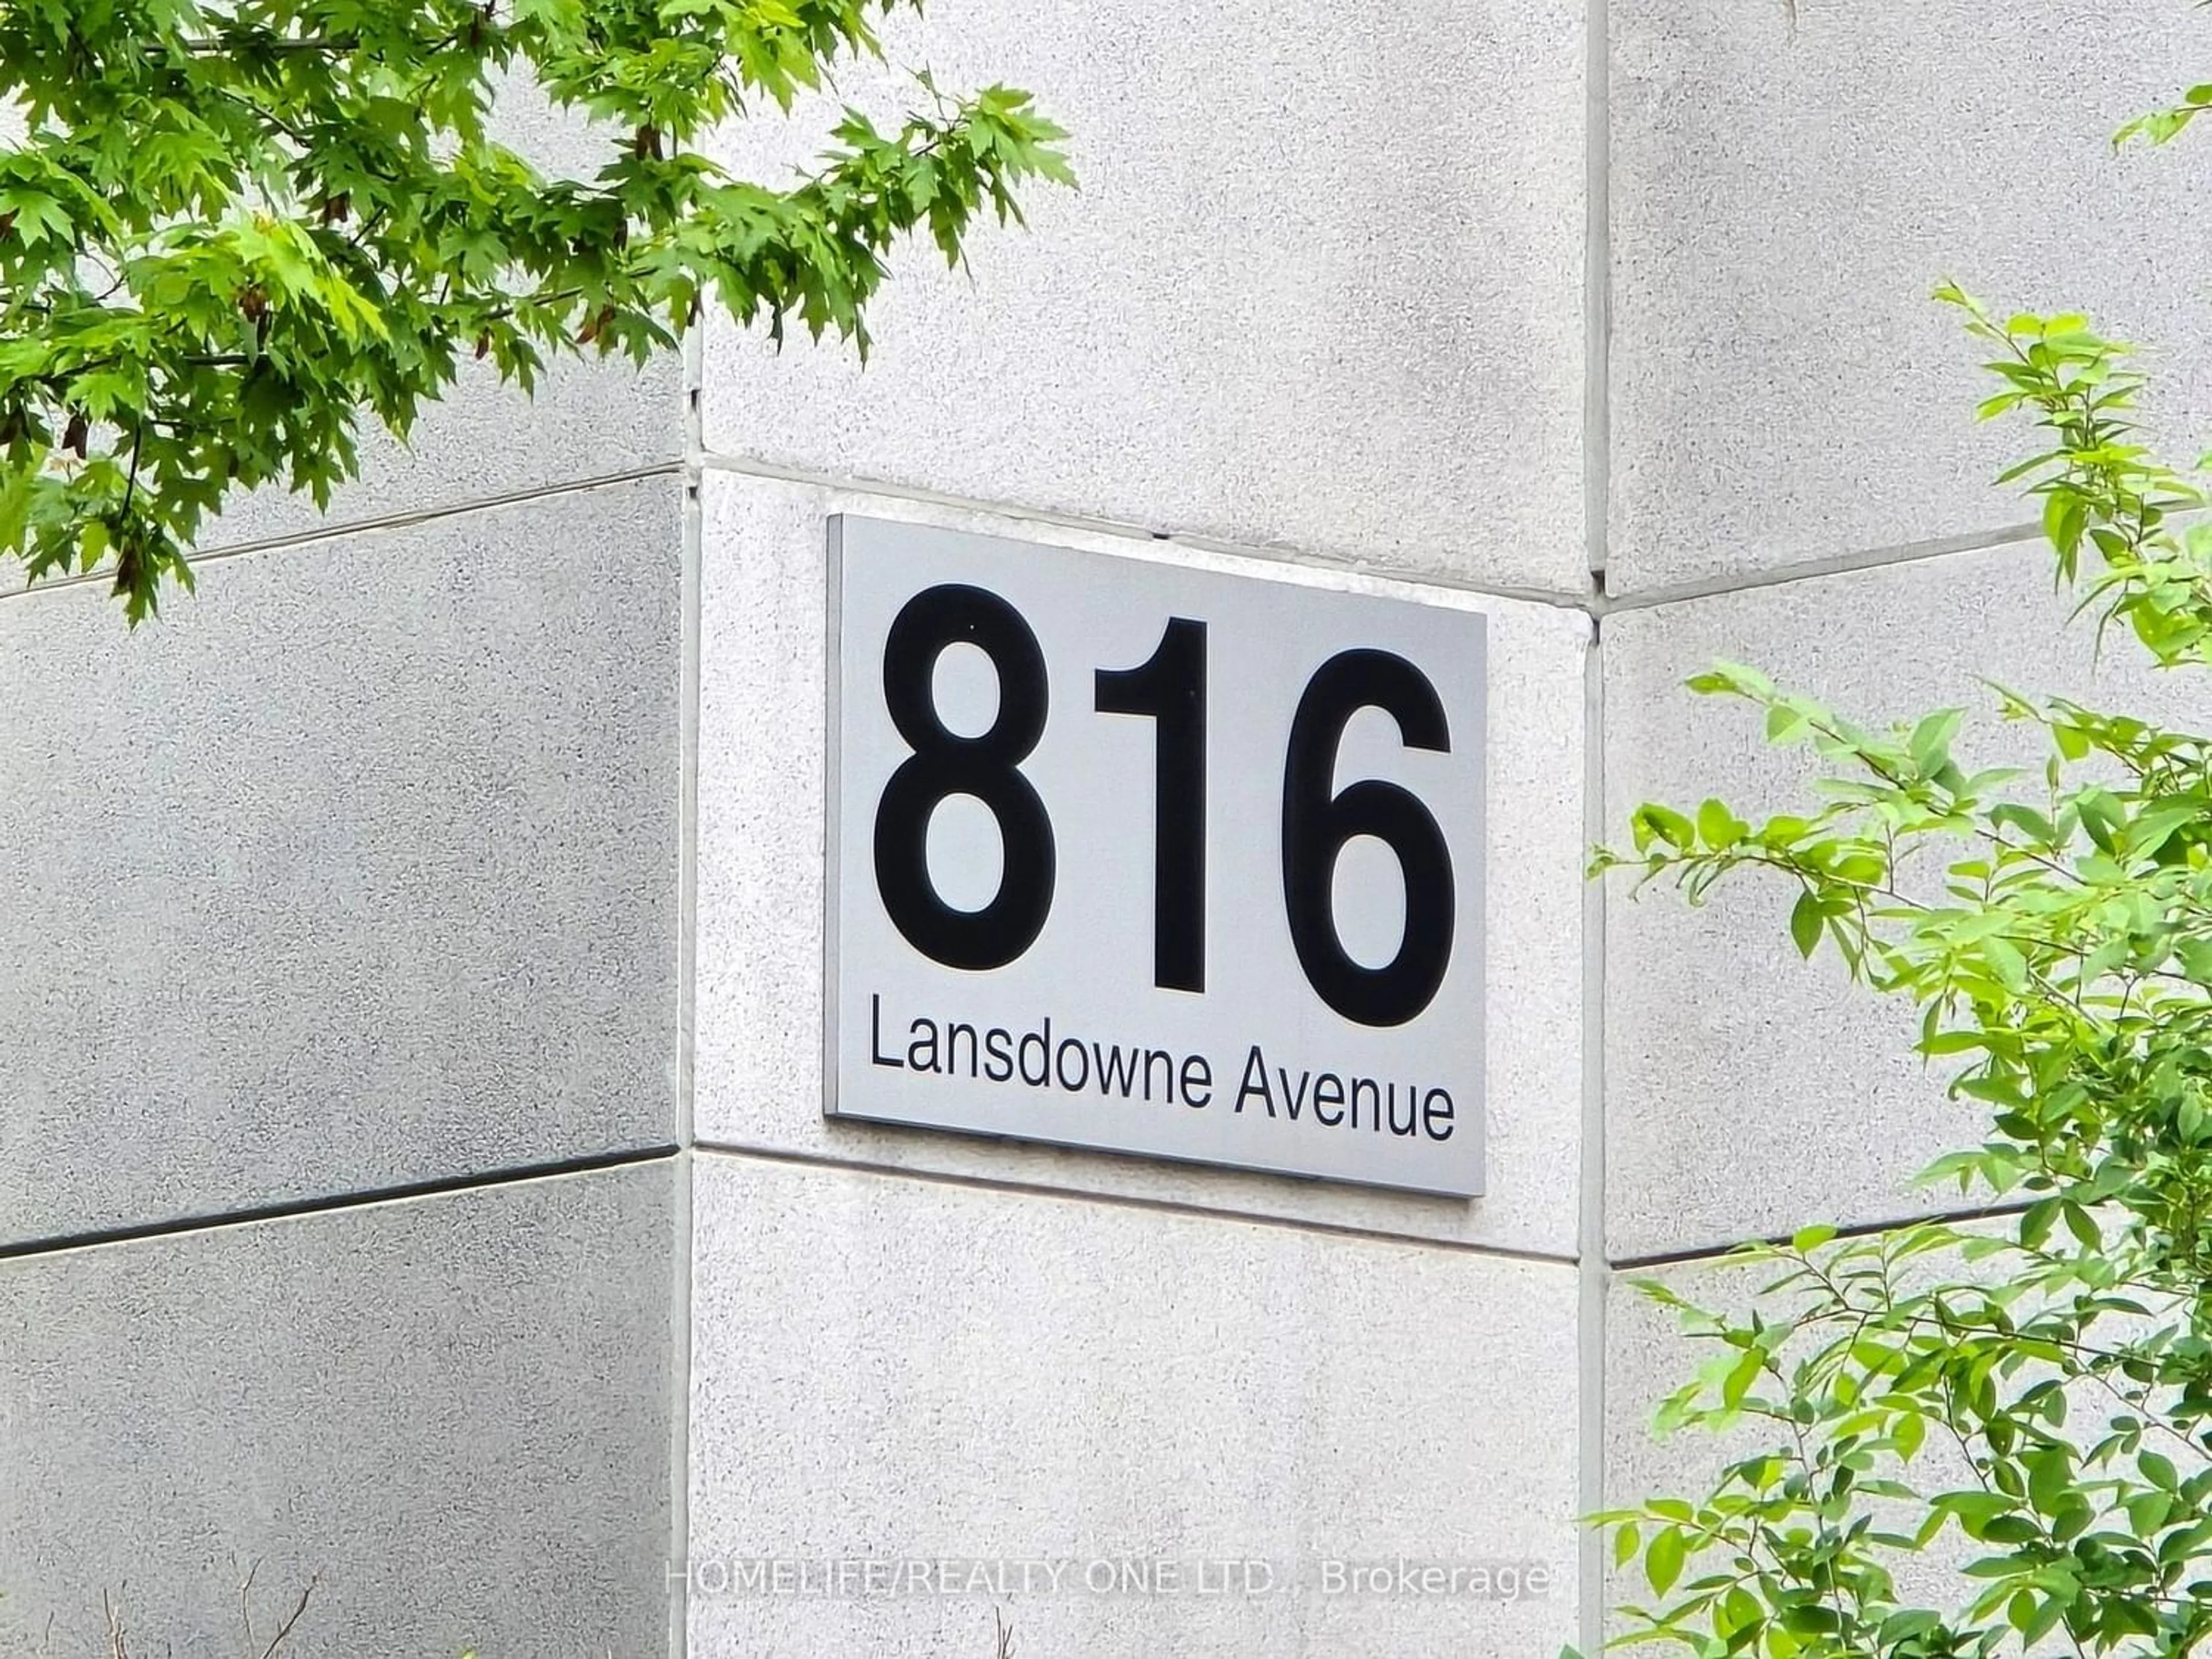 Lakeview for 816 Lansdowne Ave #212, Toronto Ontario M6H 4K6